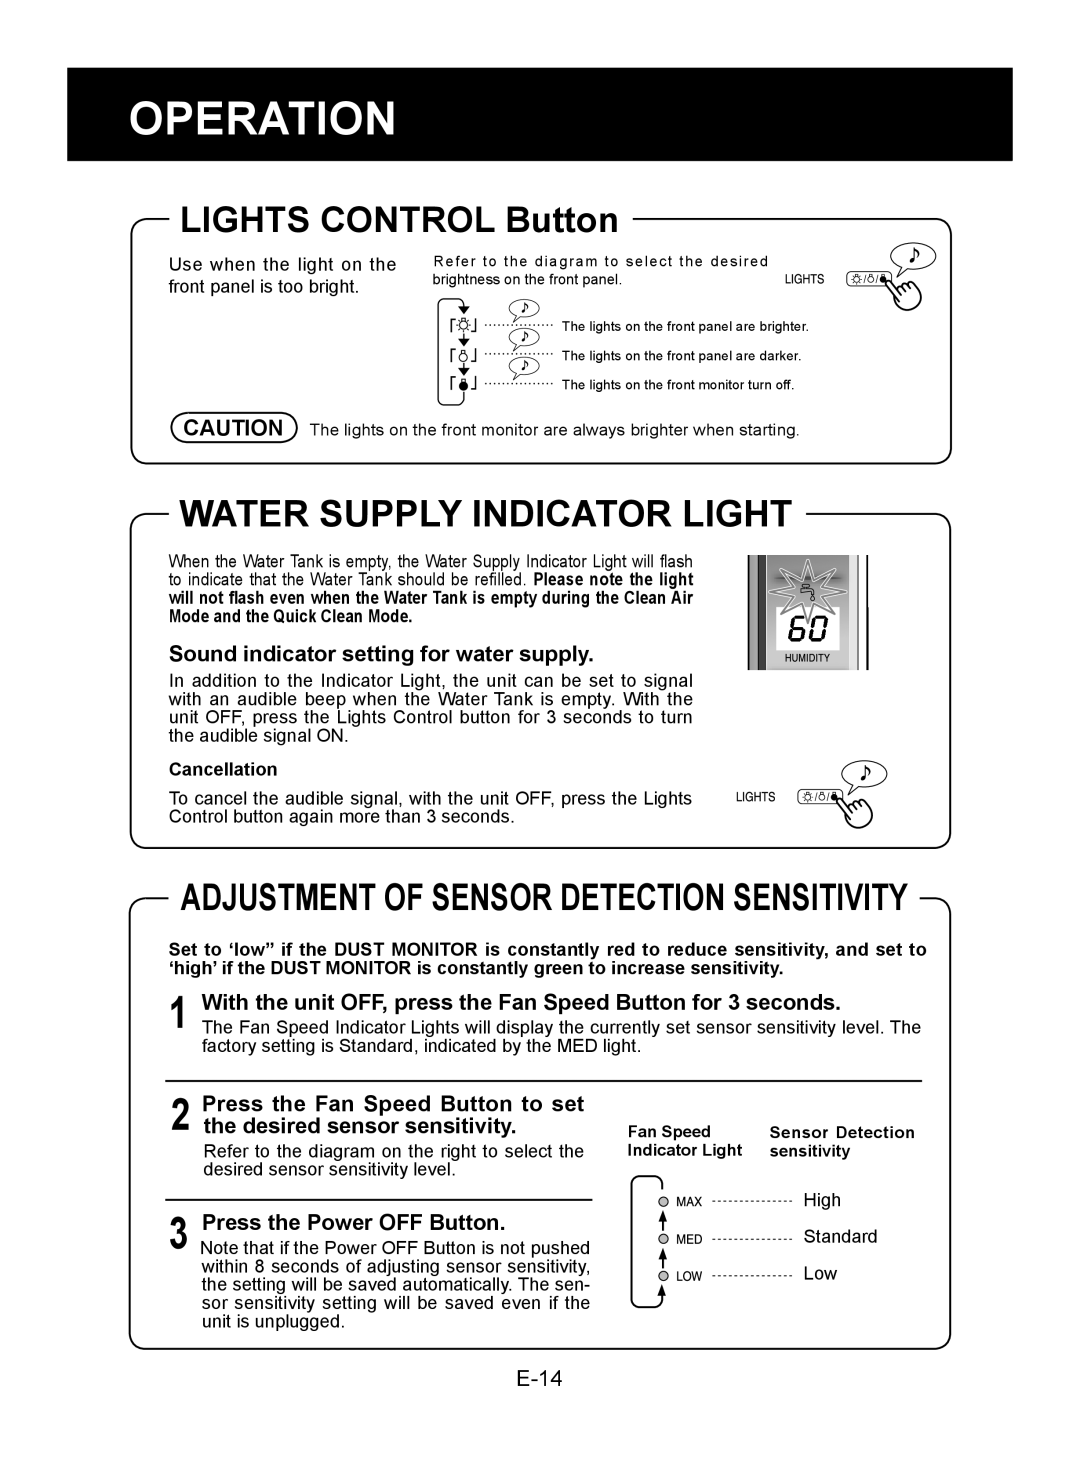 Sharp KC-850U Water Supply Indicator Light, LIGHTS CONTROL Button, Adjustment Of Sensor Detection Sensitivity, E-4 